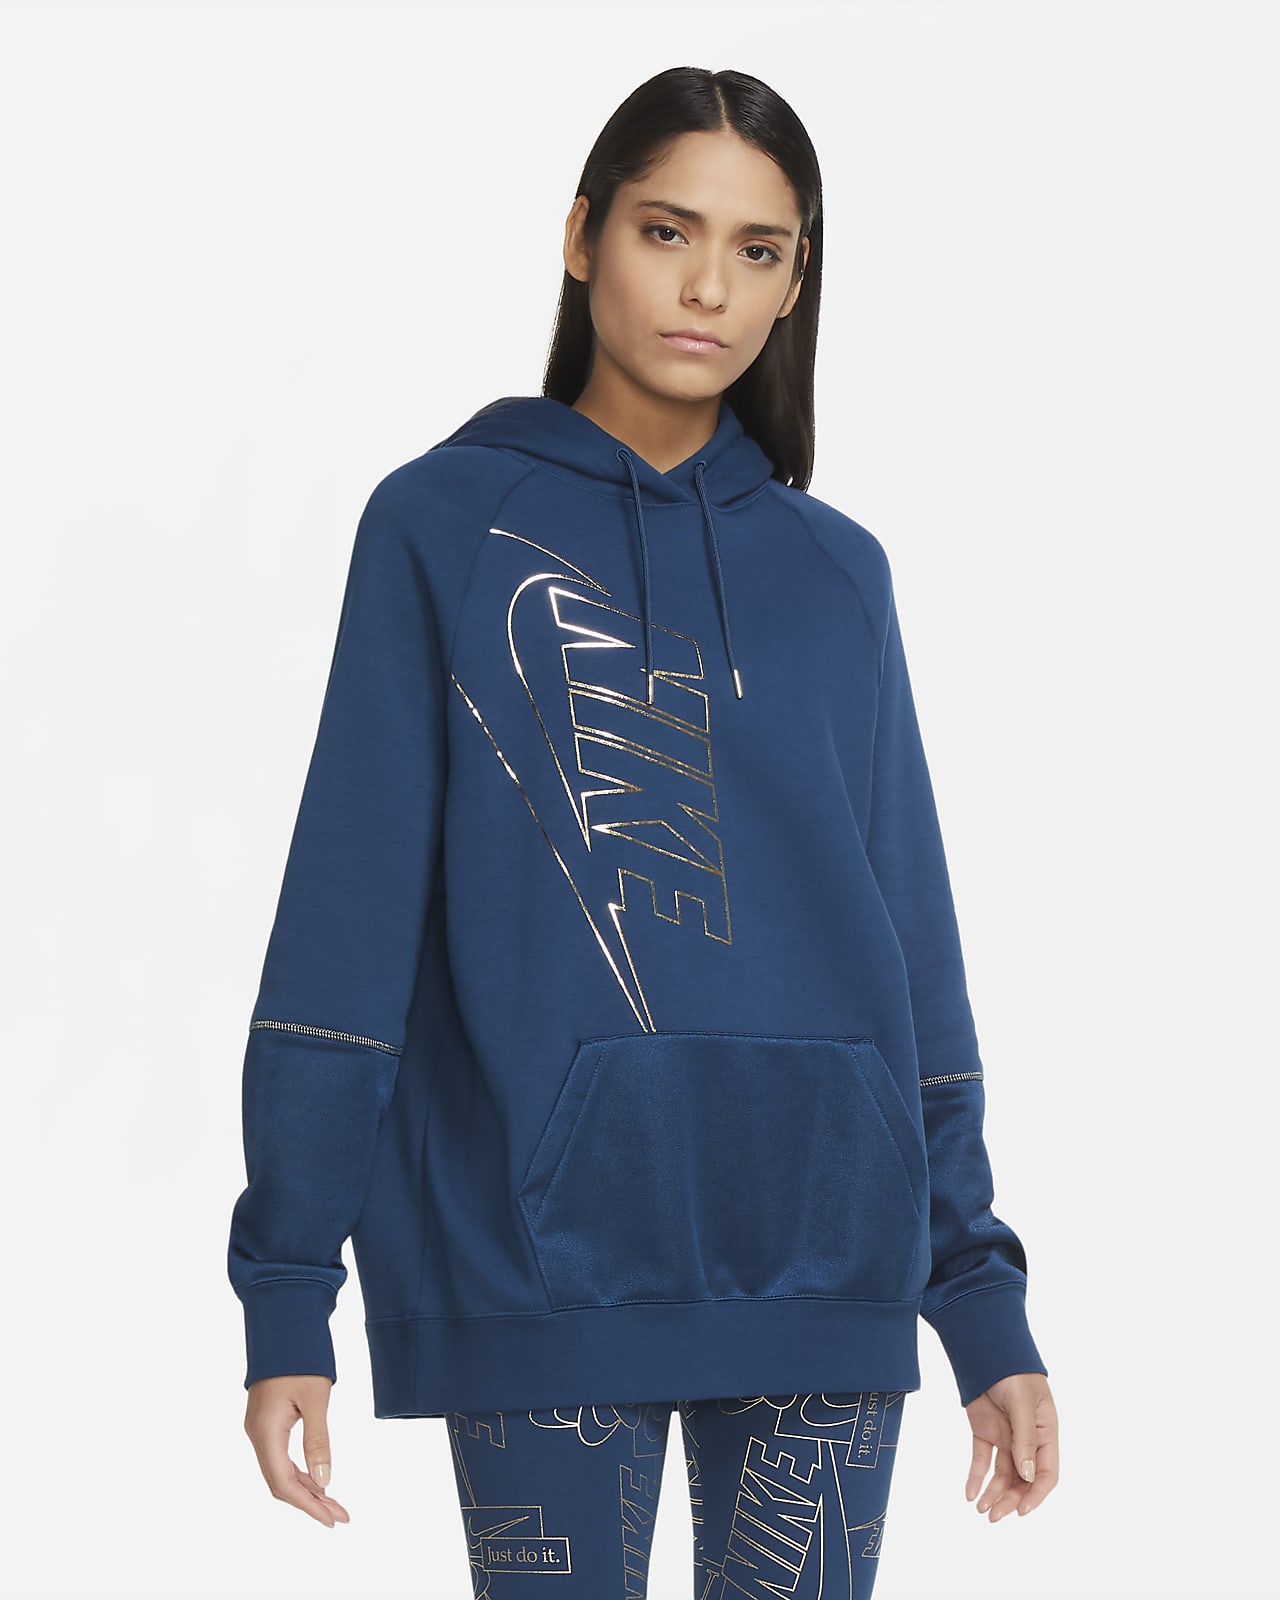 nike sportswear icon clash hoodie